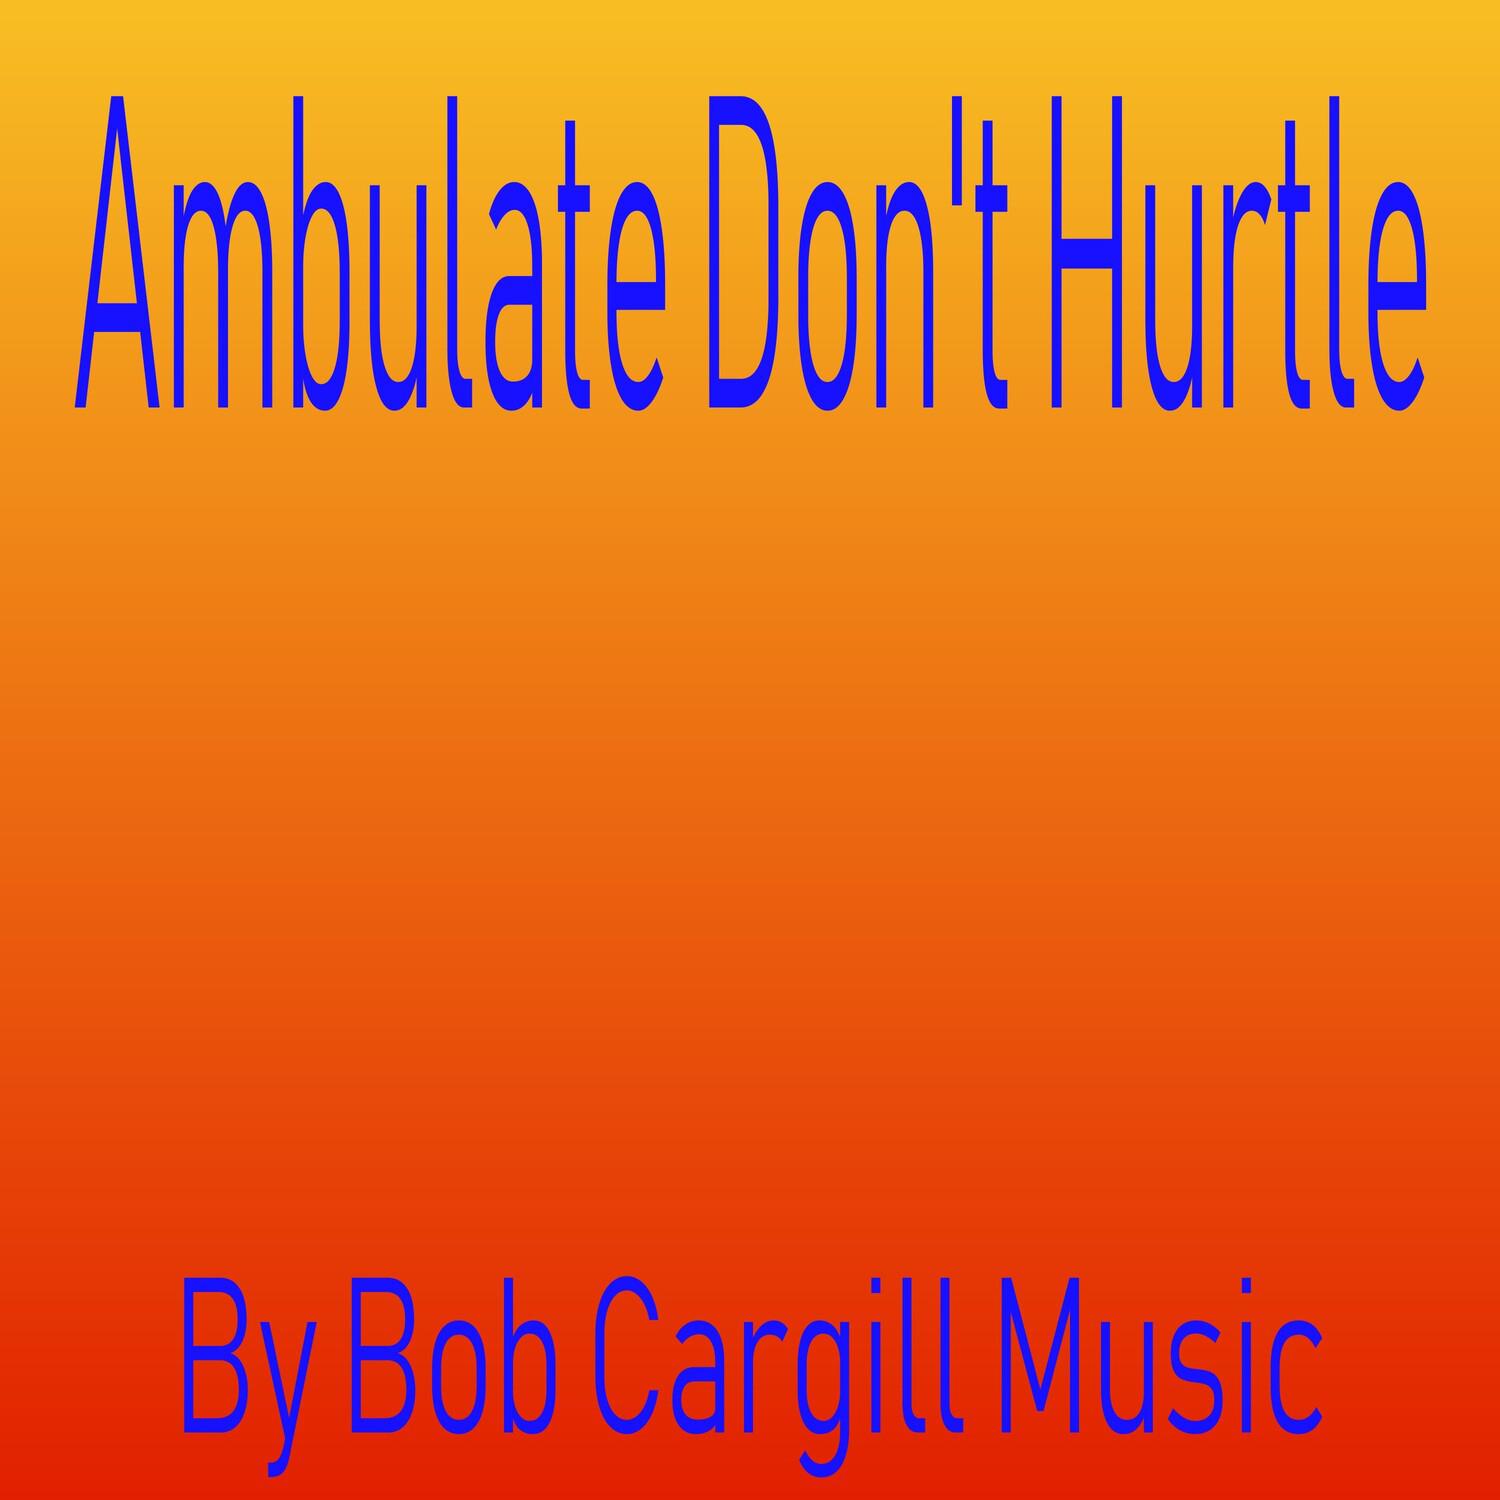 Ambulate Don't Hurtle